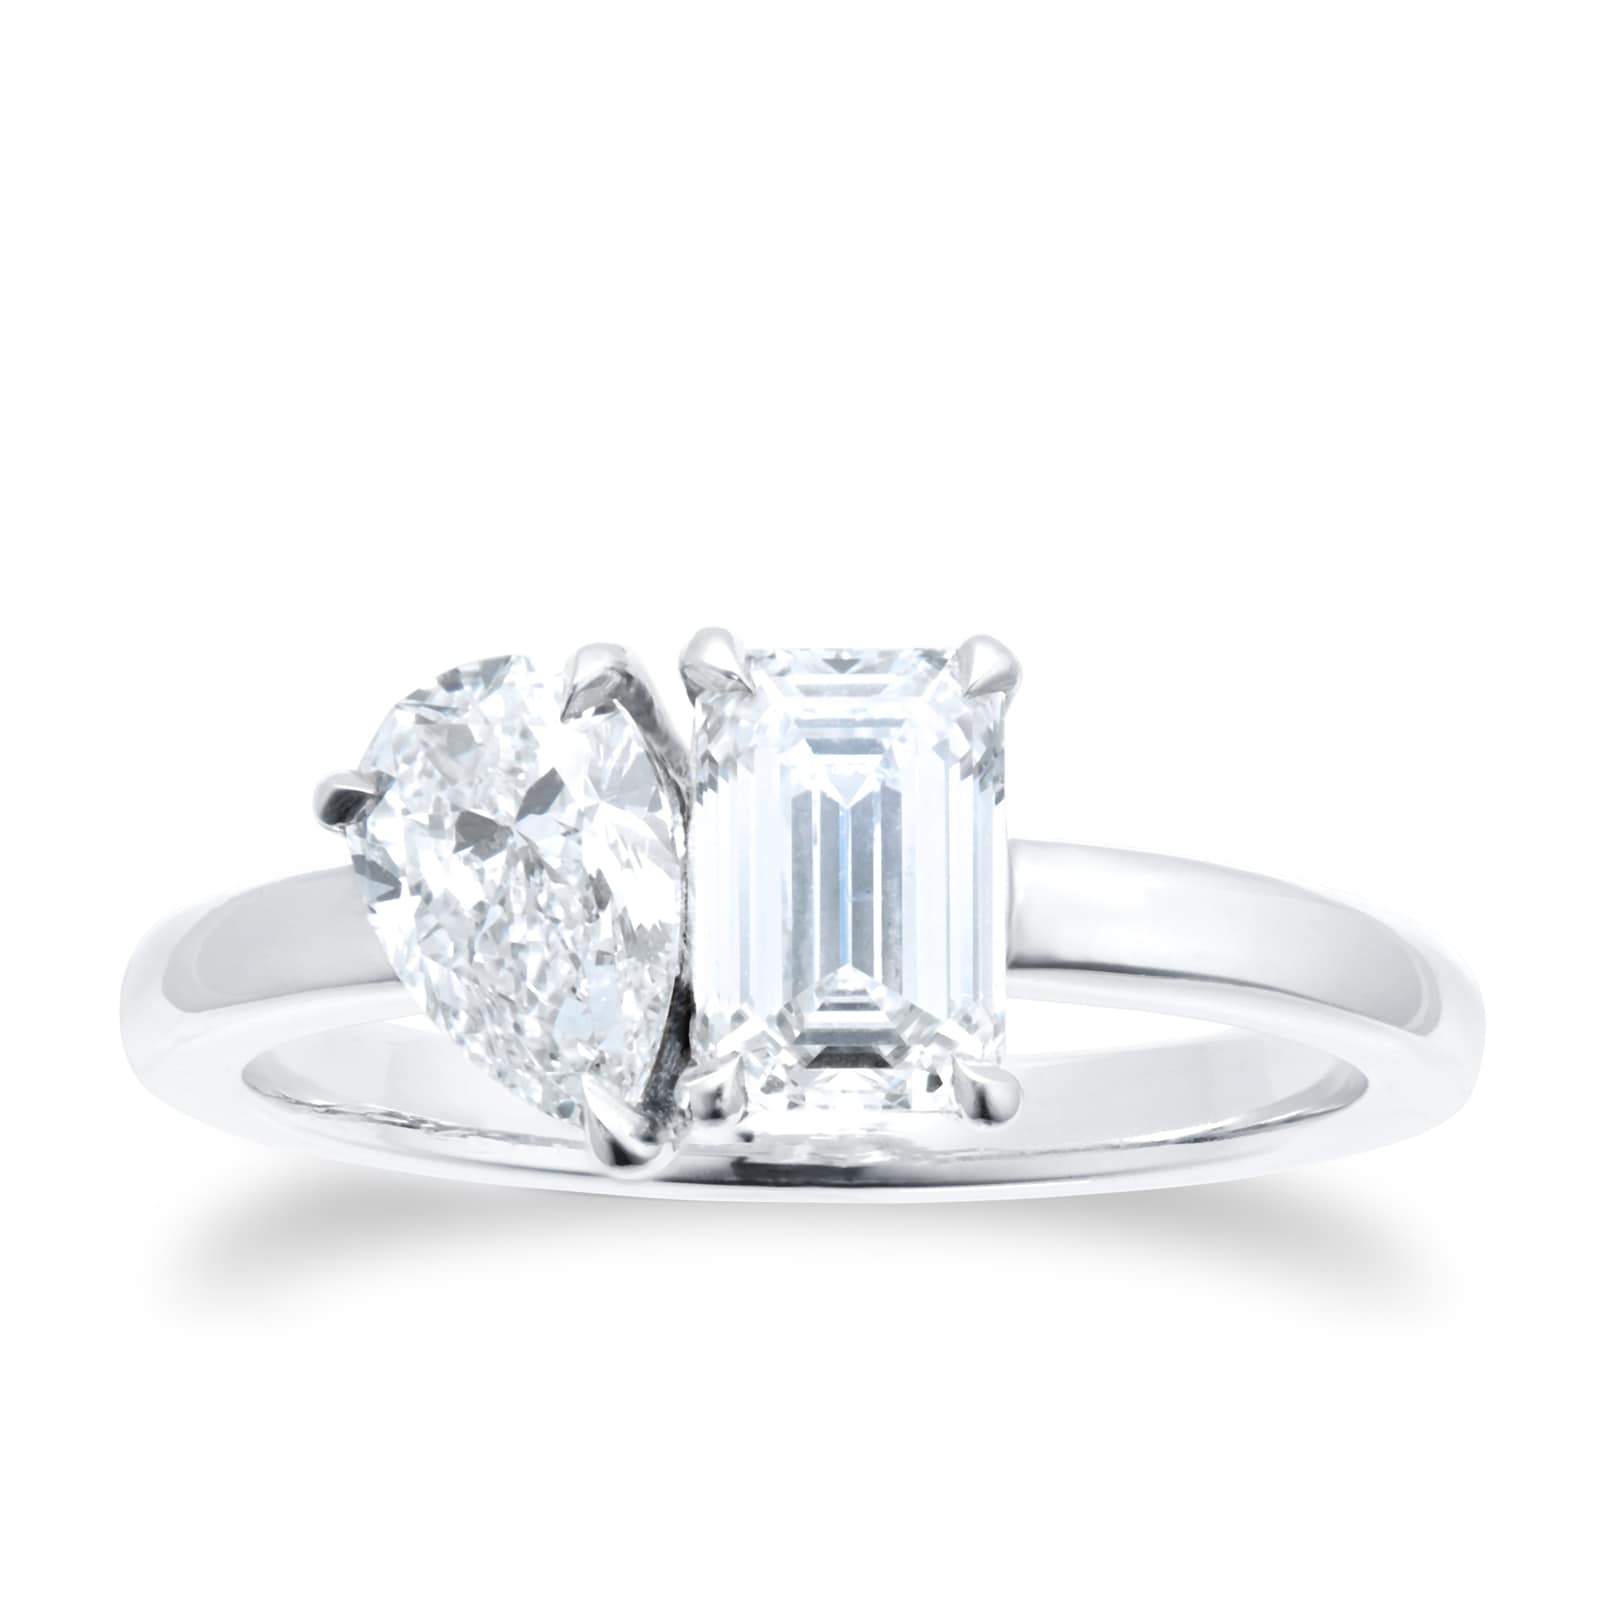 Platinum Tois Et Moi 1.60cttw Pear & Emerald Cut Diamond Ring - Ring Size K